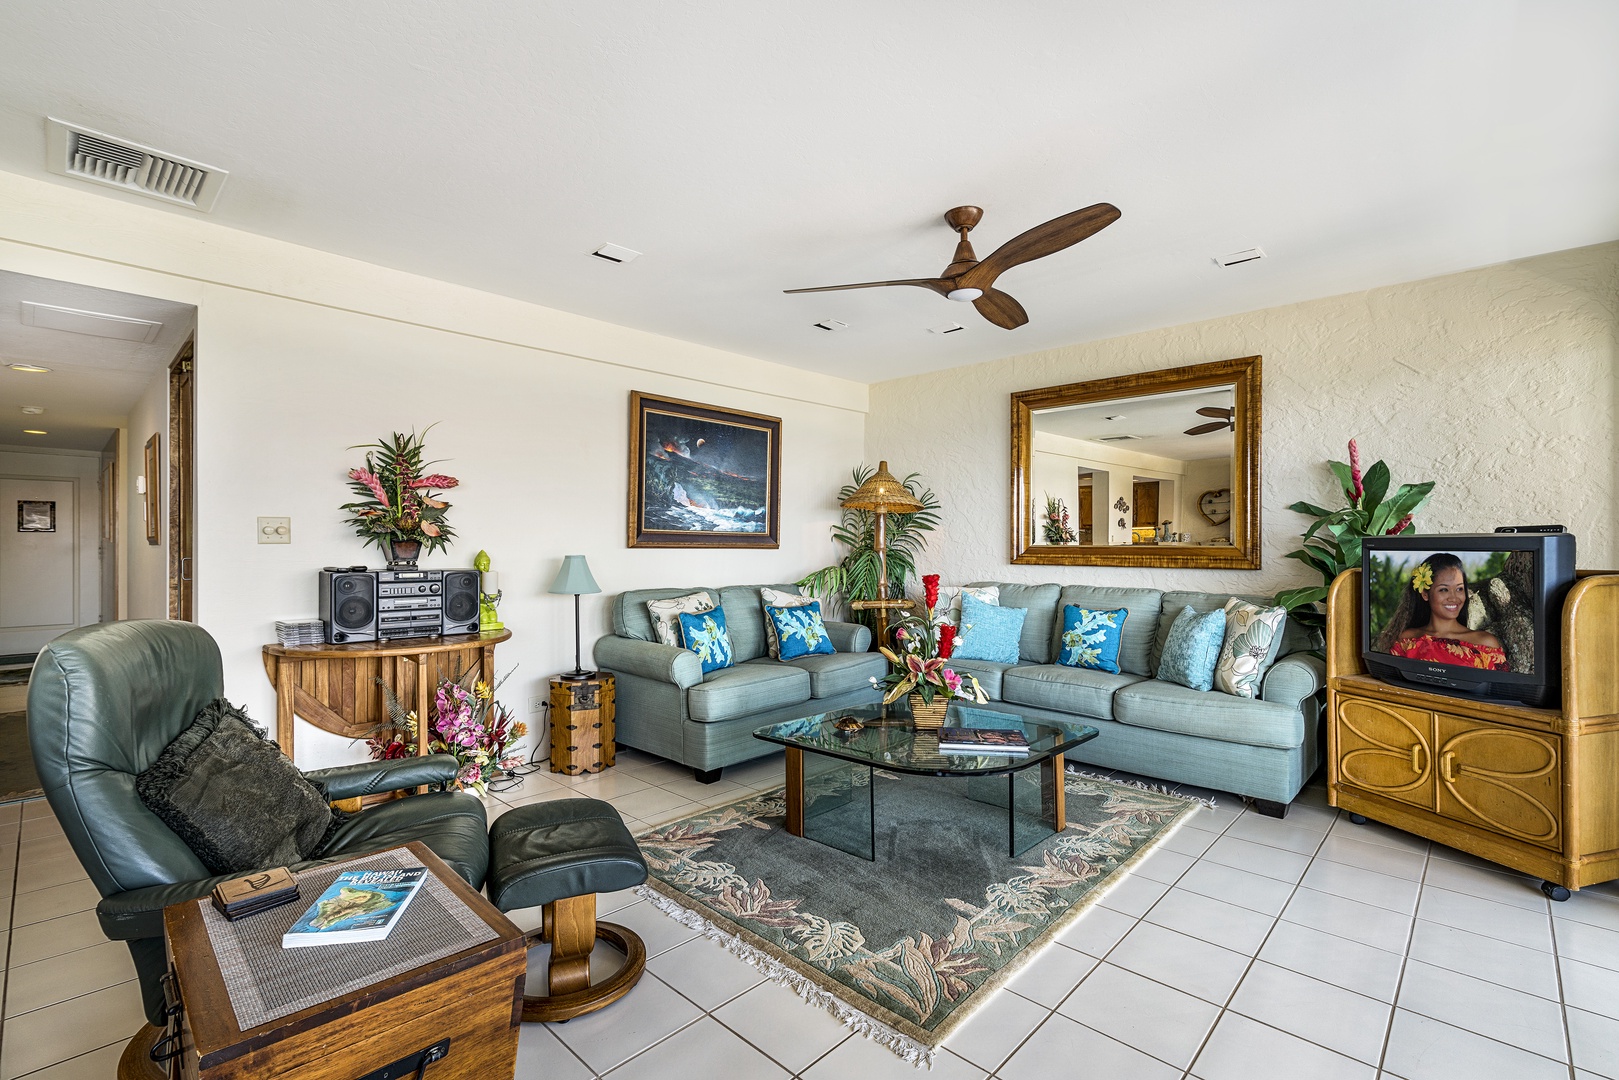 Kailua Kona Vacation Rentals, Casa De Emdeko 336 - Take your pick between the cozy couch or comfortable recliners